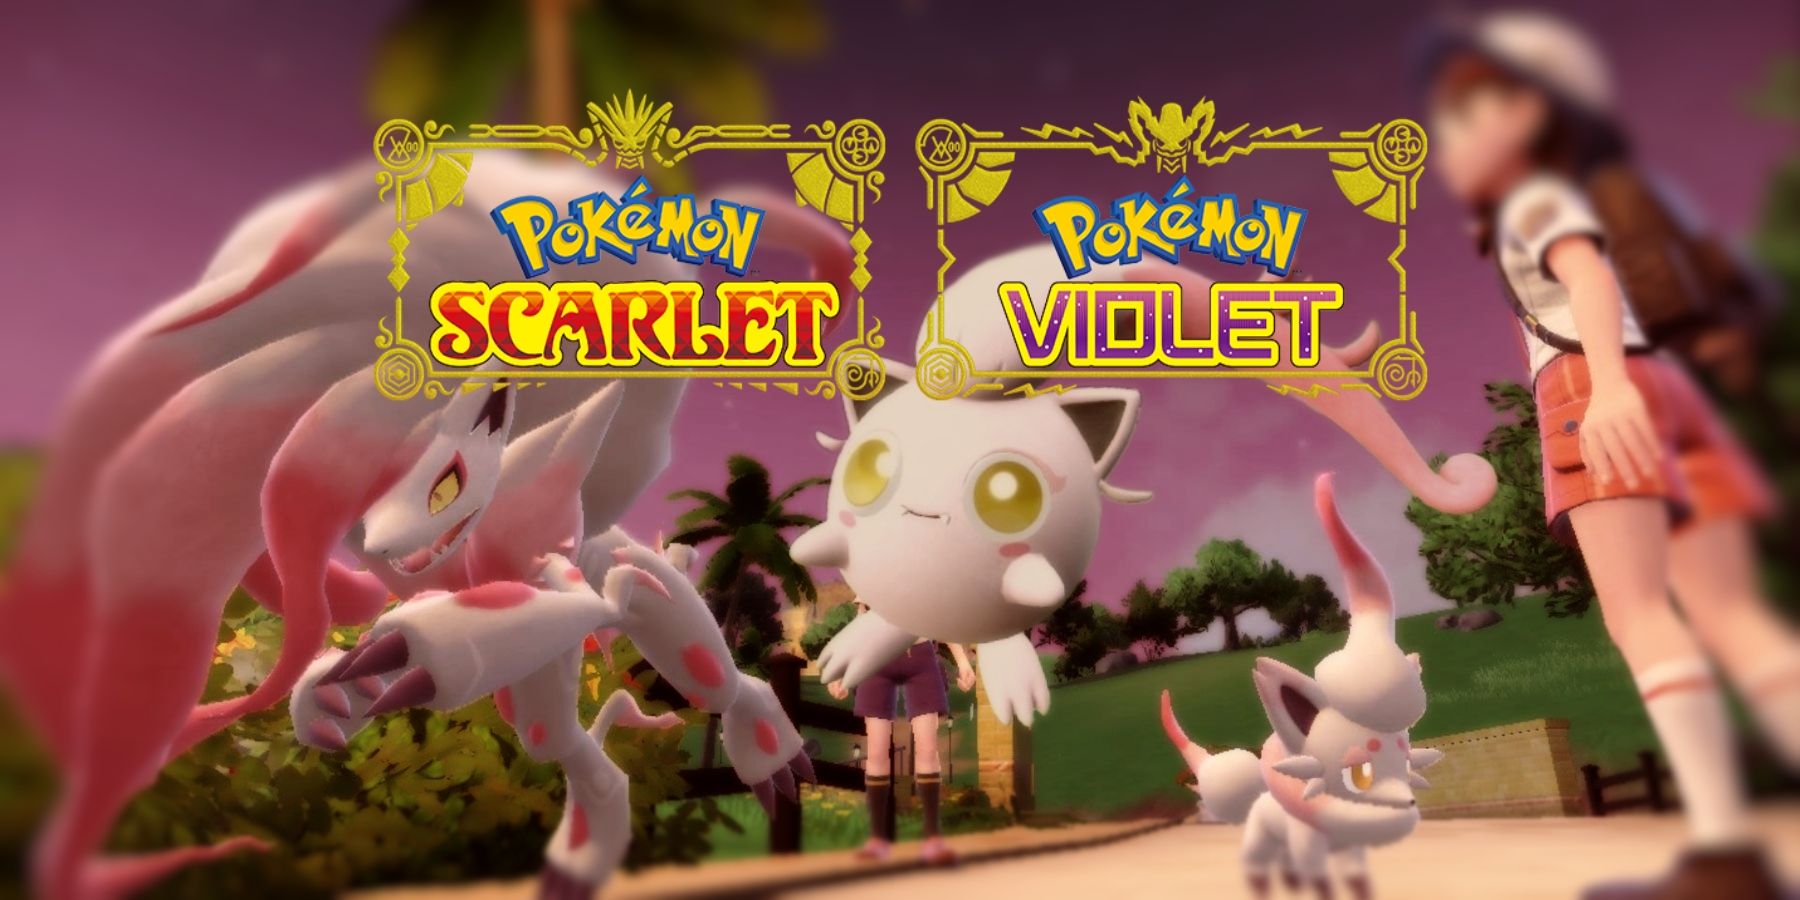 Pokémon Scarlet and Violet Review